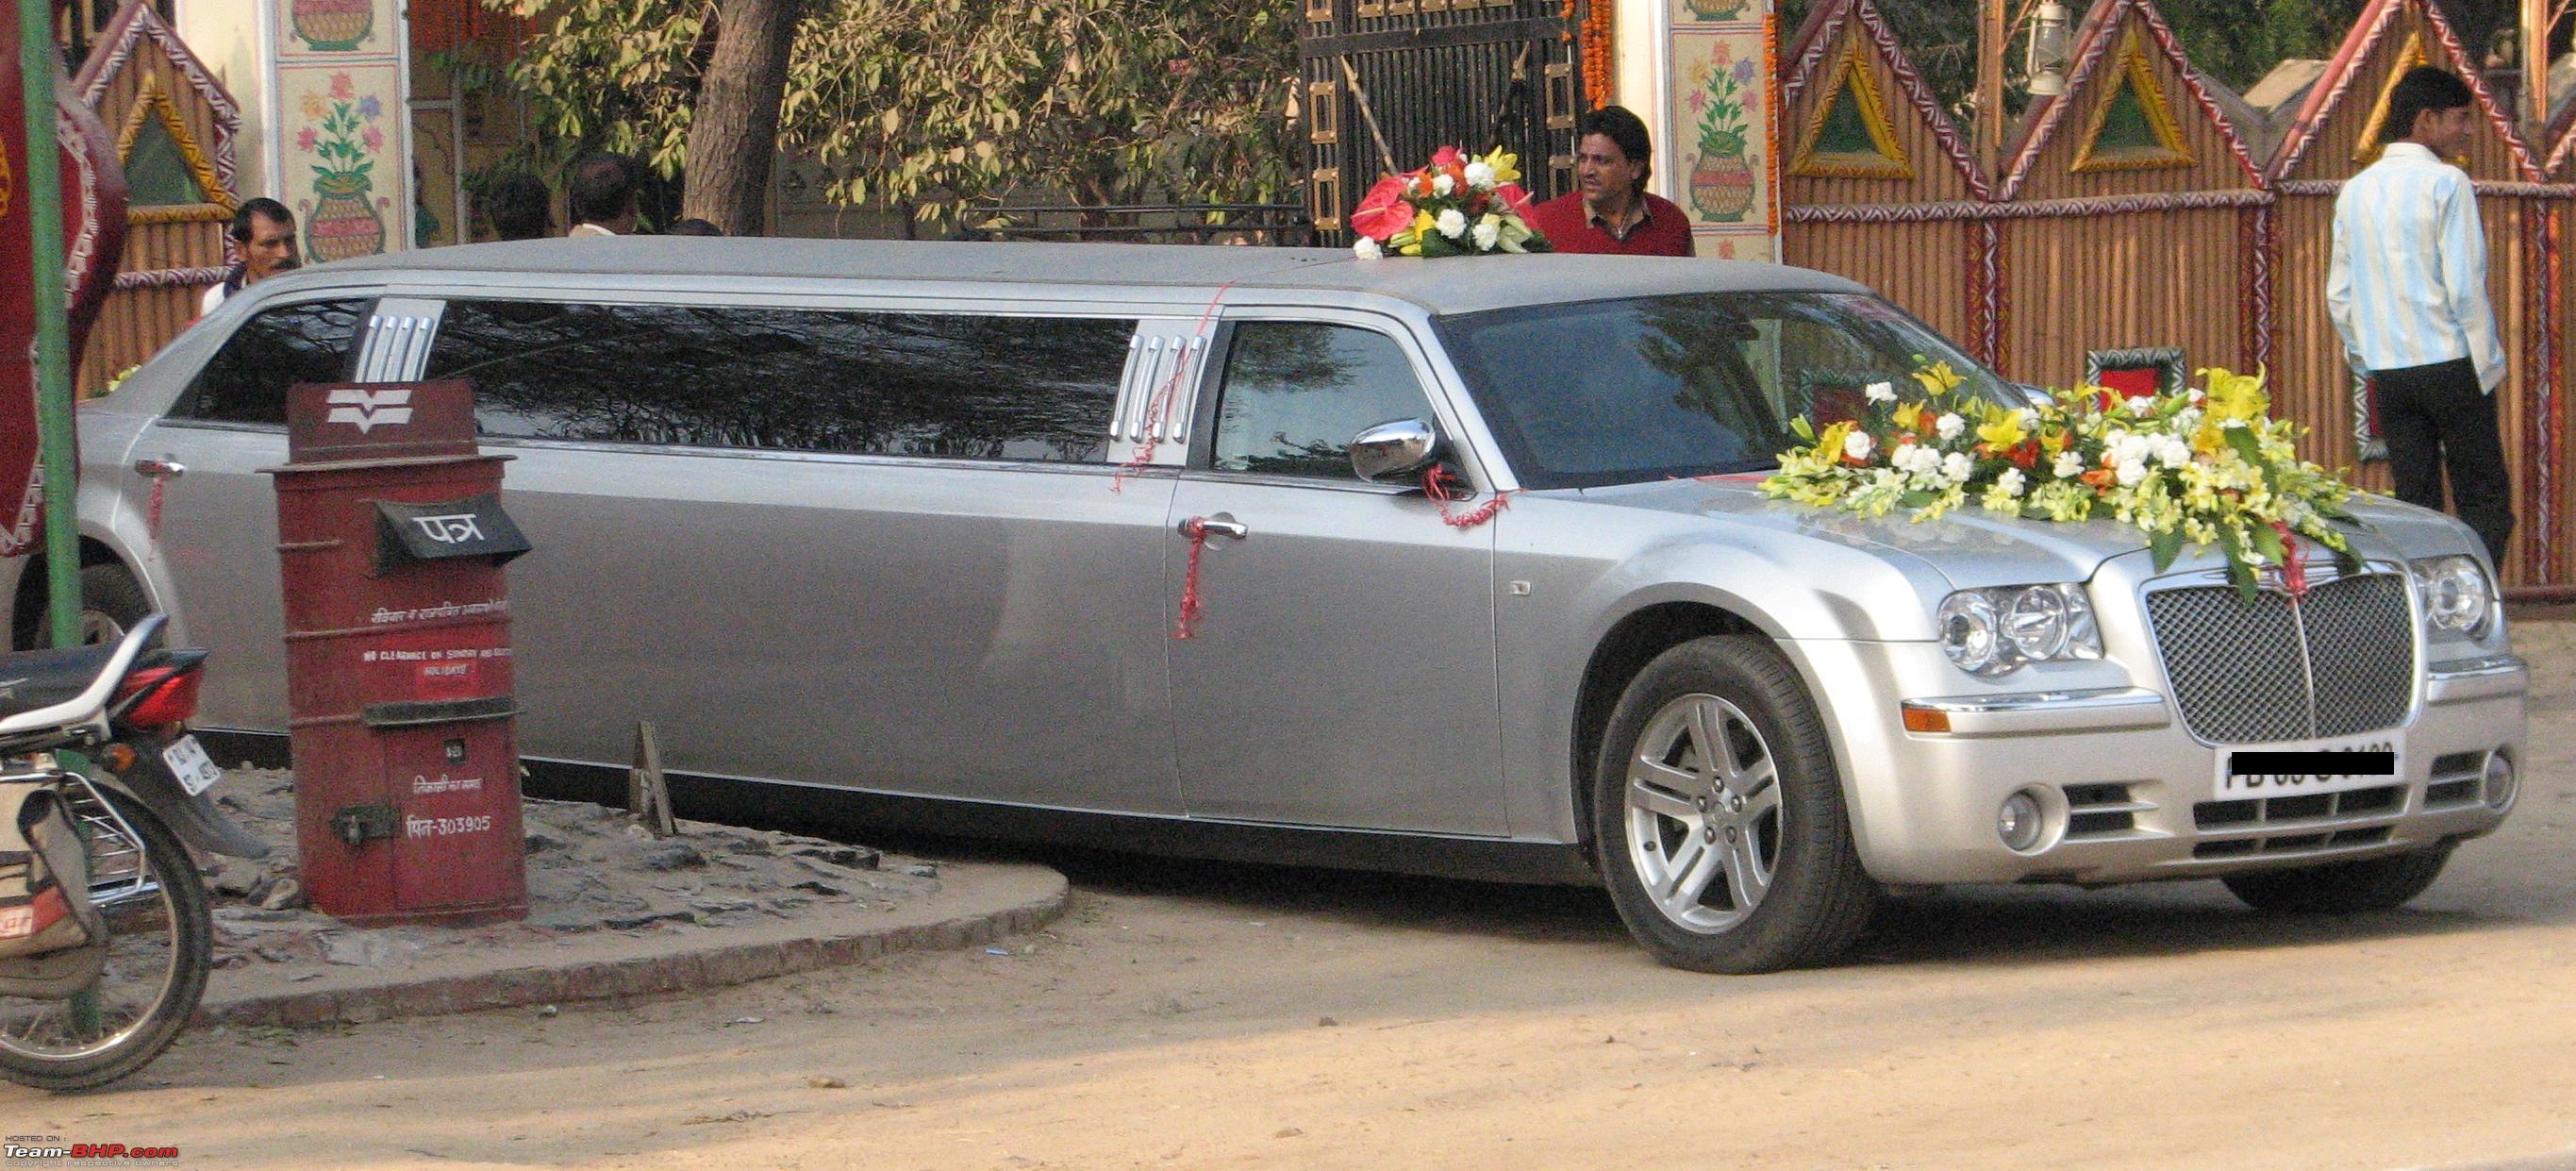 Chrysler limousine price in india #4